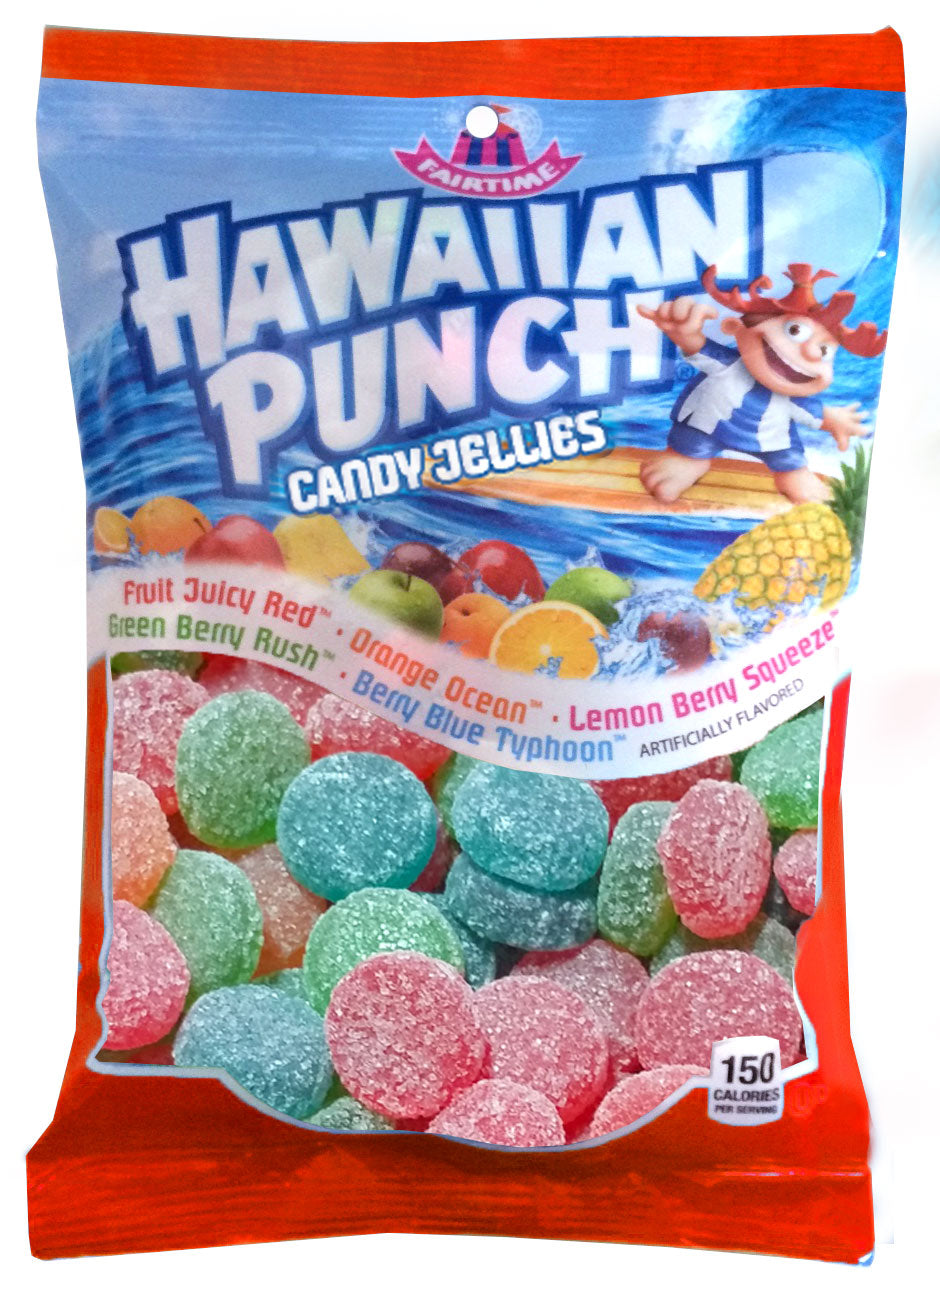 Hawaiian Punch Candy Jellies 170g - Sweets